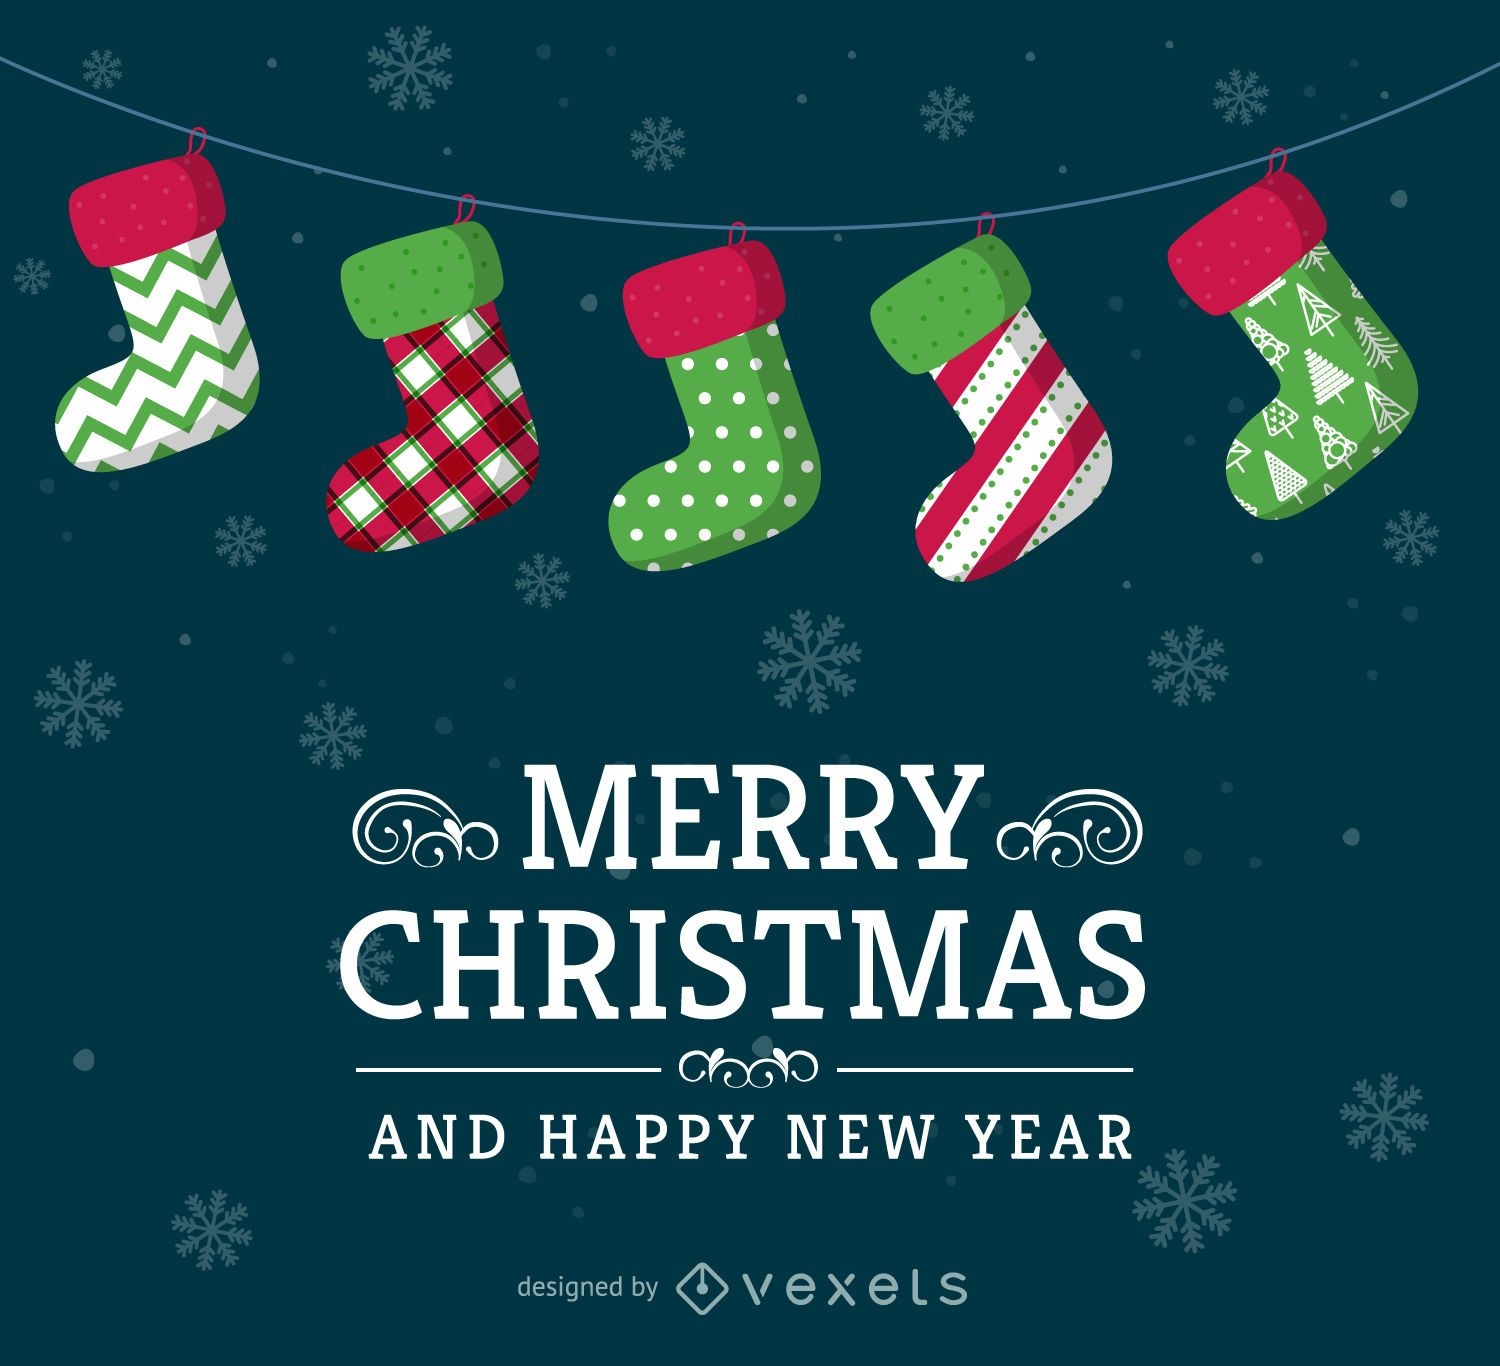 Christmas stockings card design